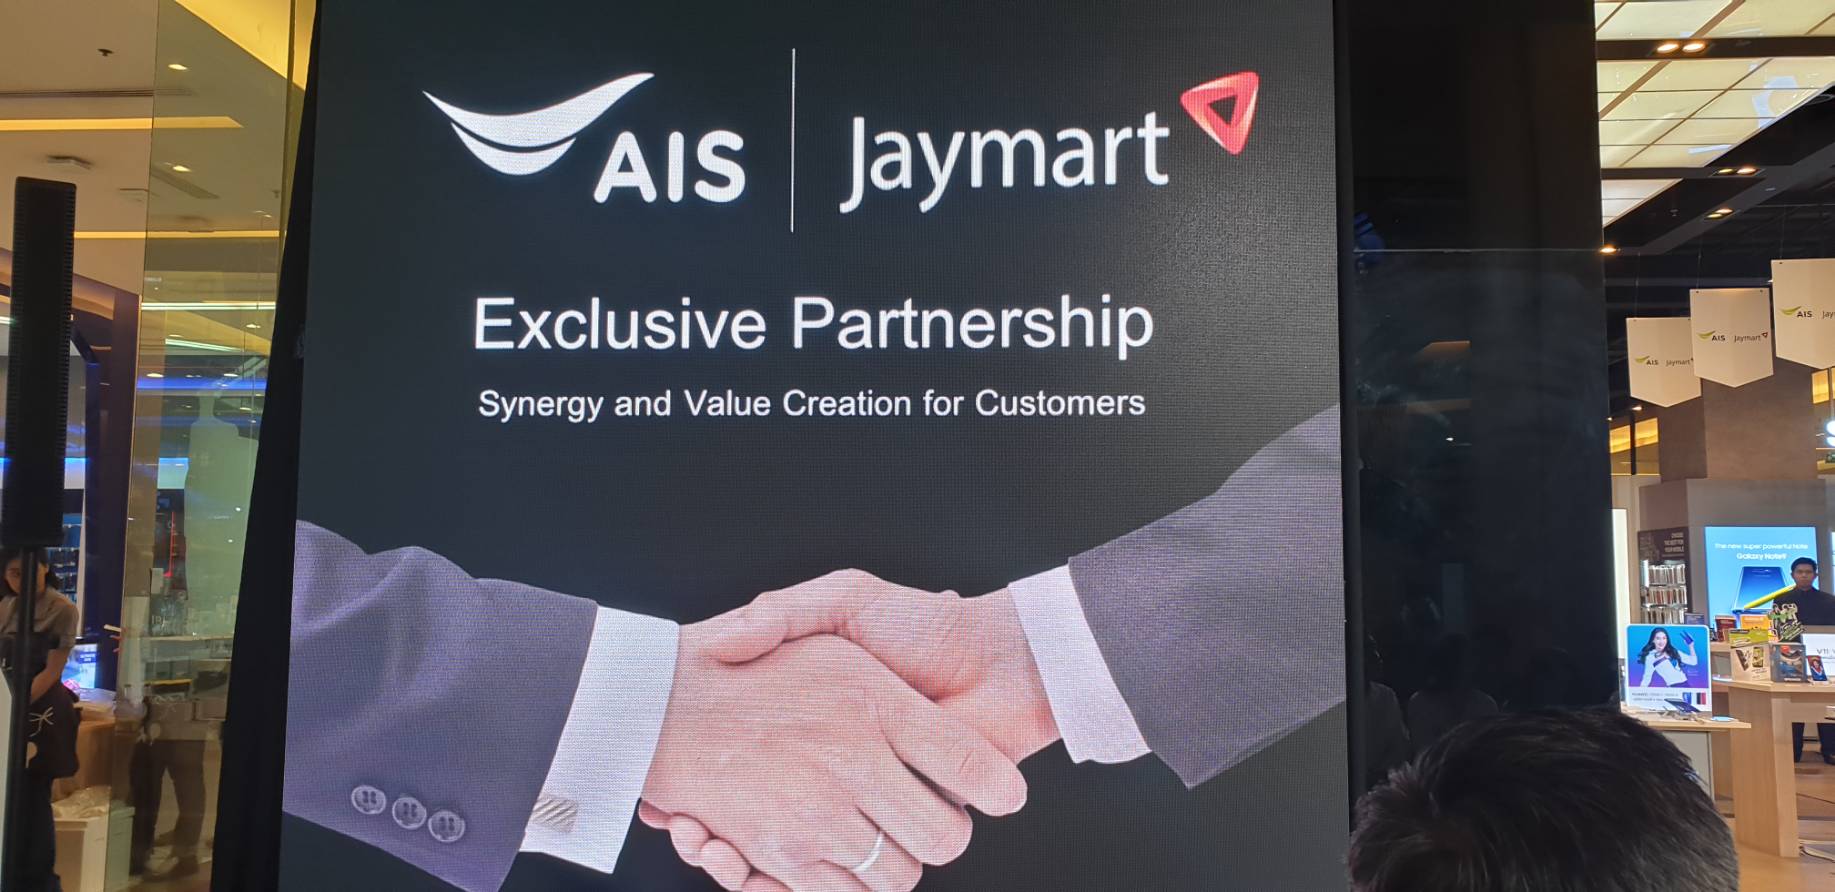 JAYMART และ AIS ผนึกกำลังร่วมเป็น Exclusive Partnership